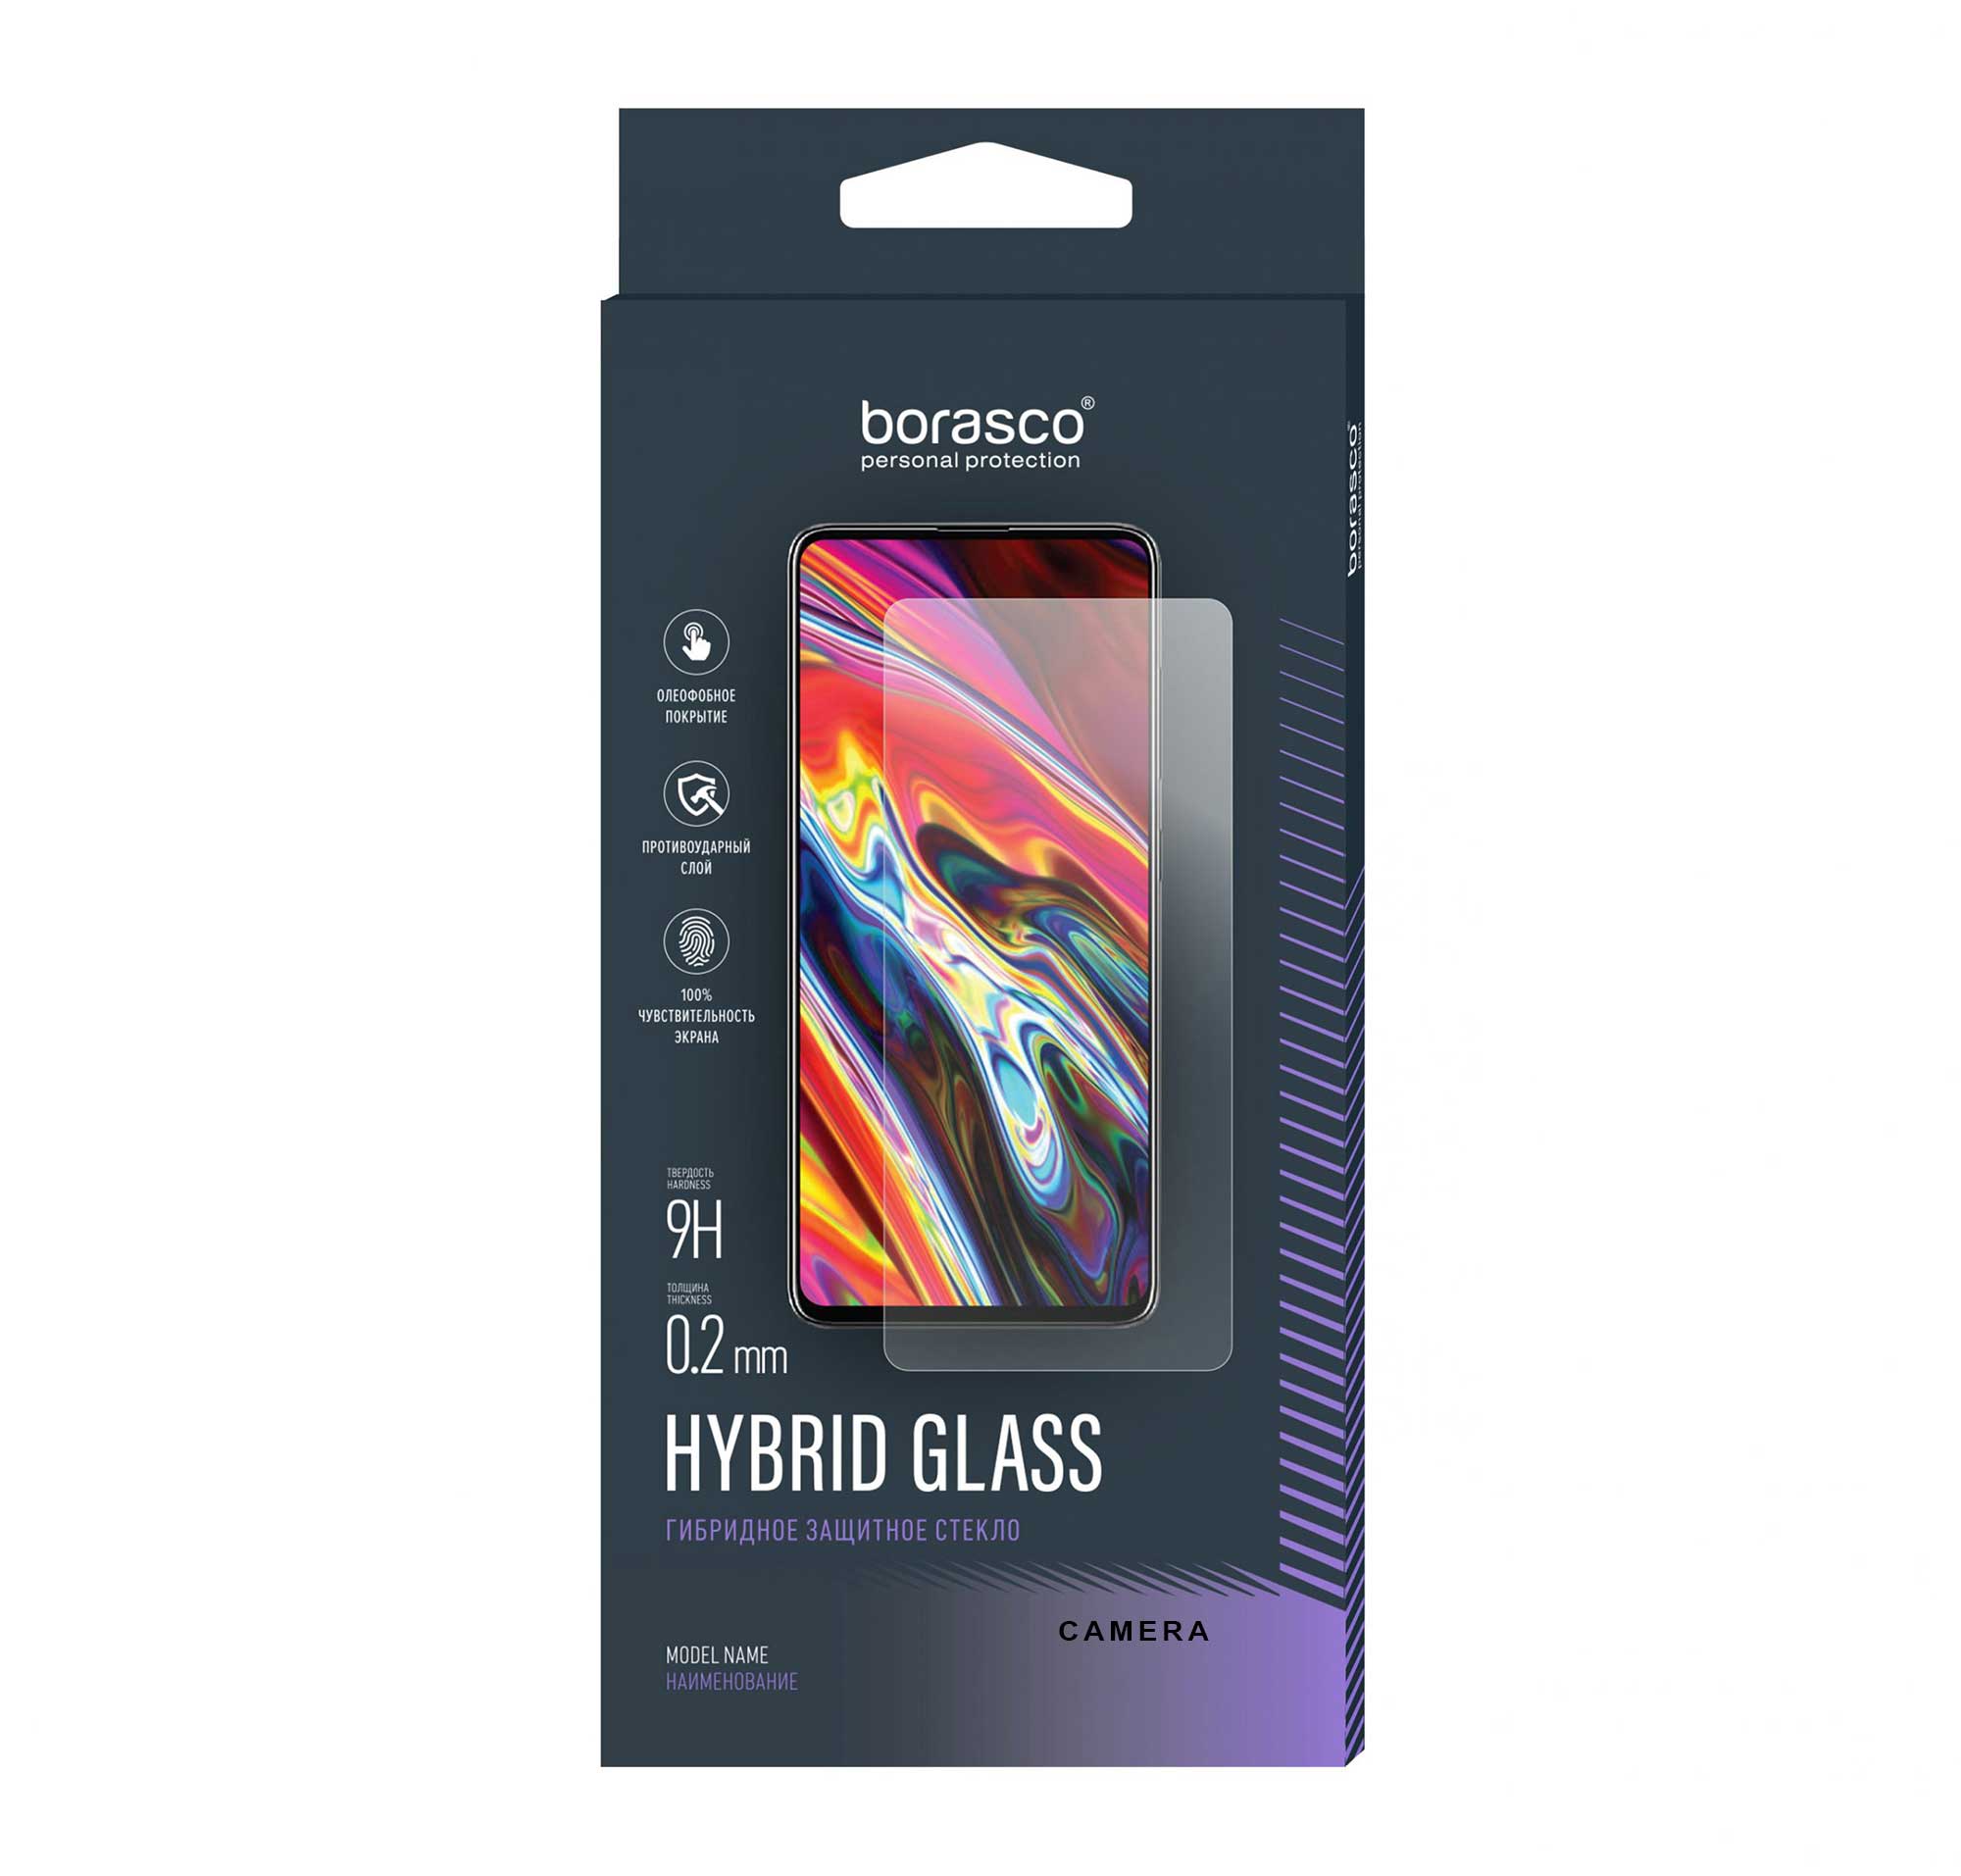 Защитное стекло (Экран+Камера) BoraSCO Hybrid Glass для ITEL Vision 1 Pro чехол mypads микки маус троллер для itel s16 itel vision 1 pro задняя панель накладка бампер